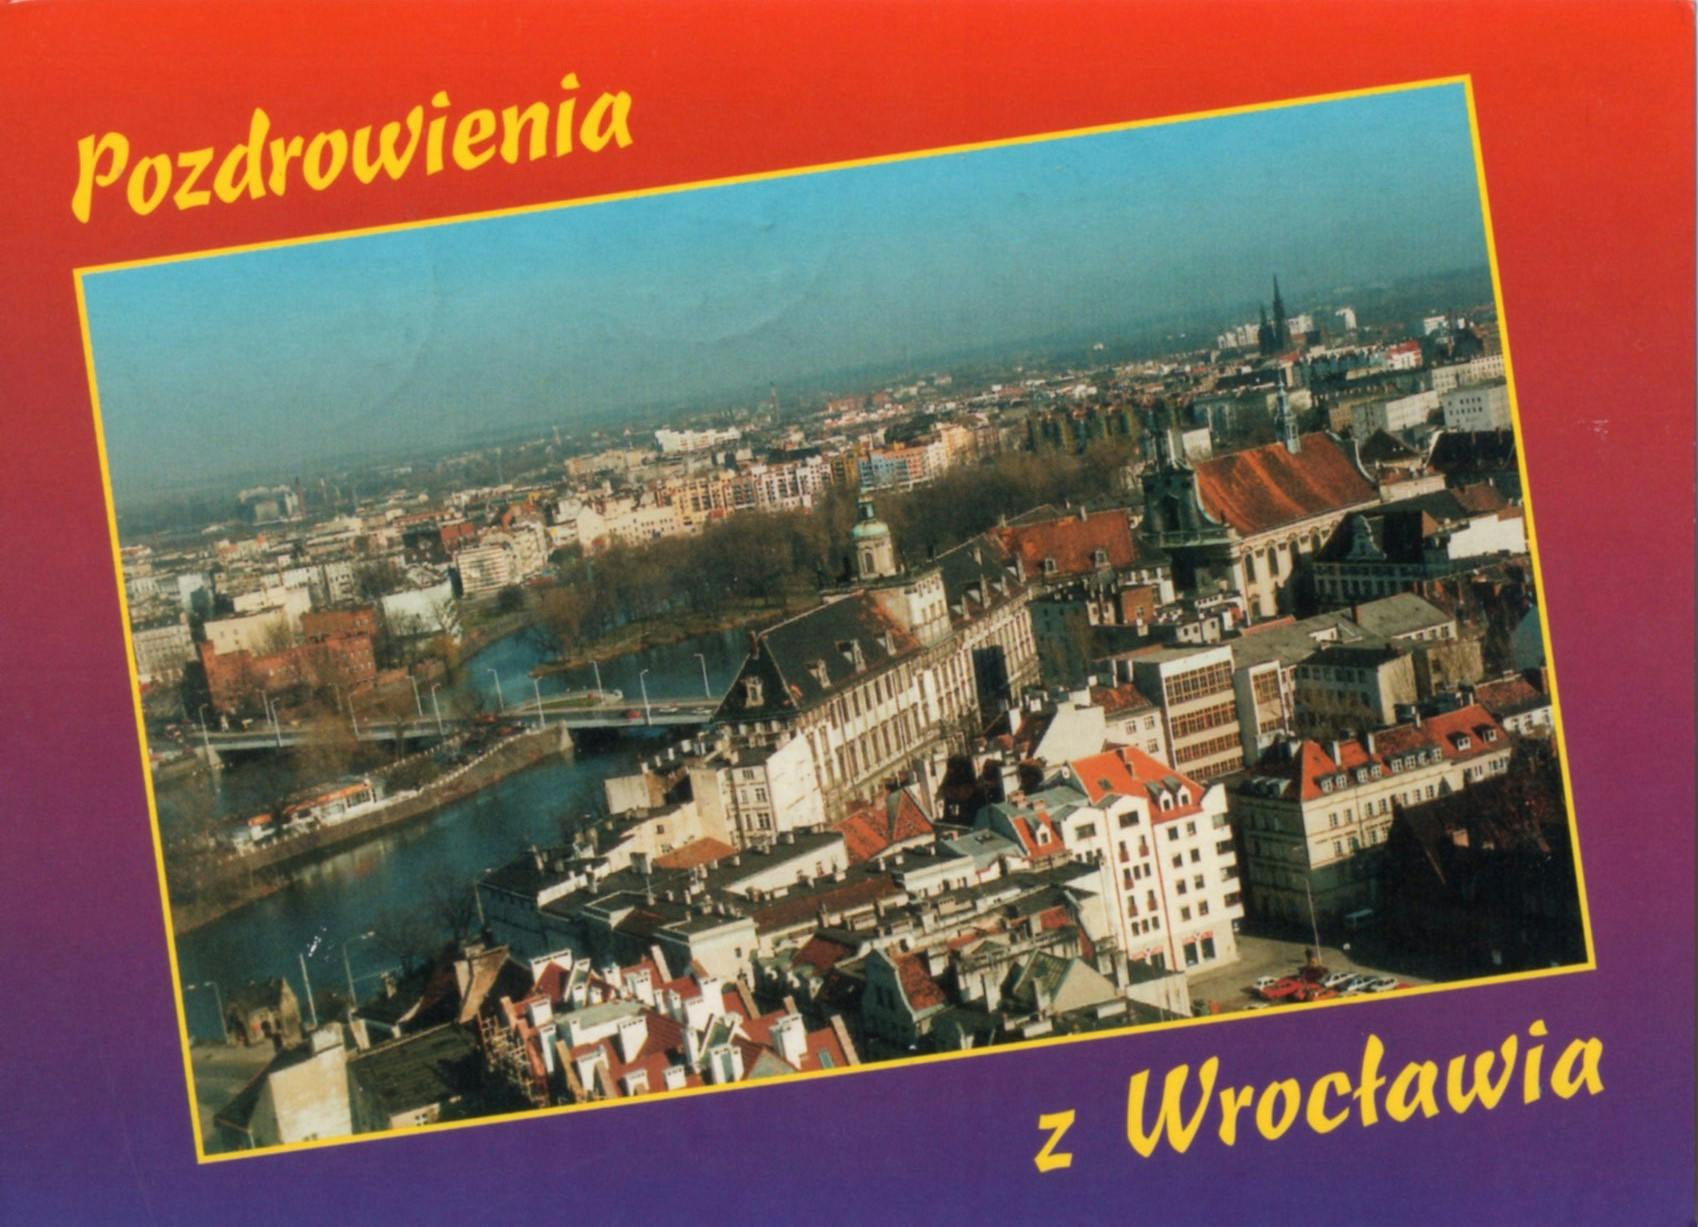 Poland card front 12